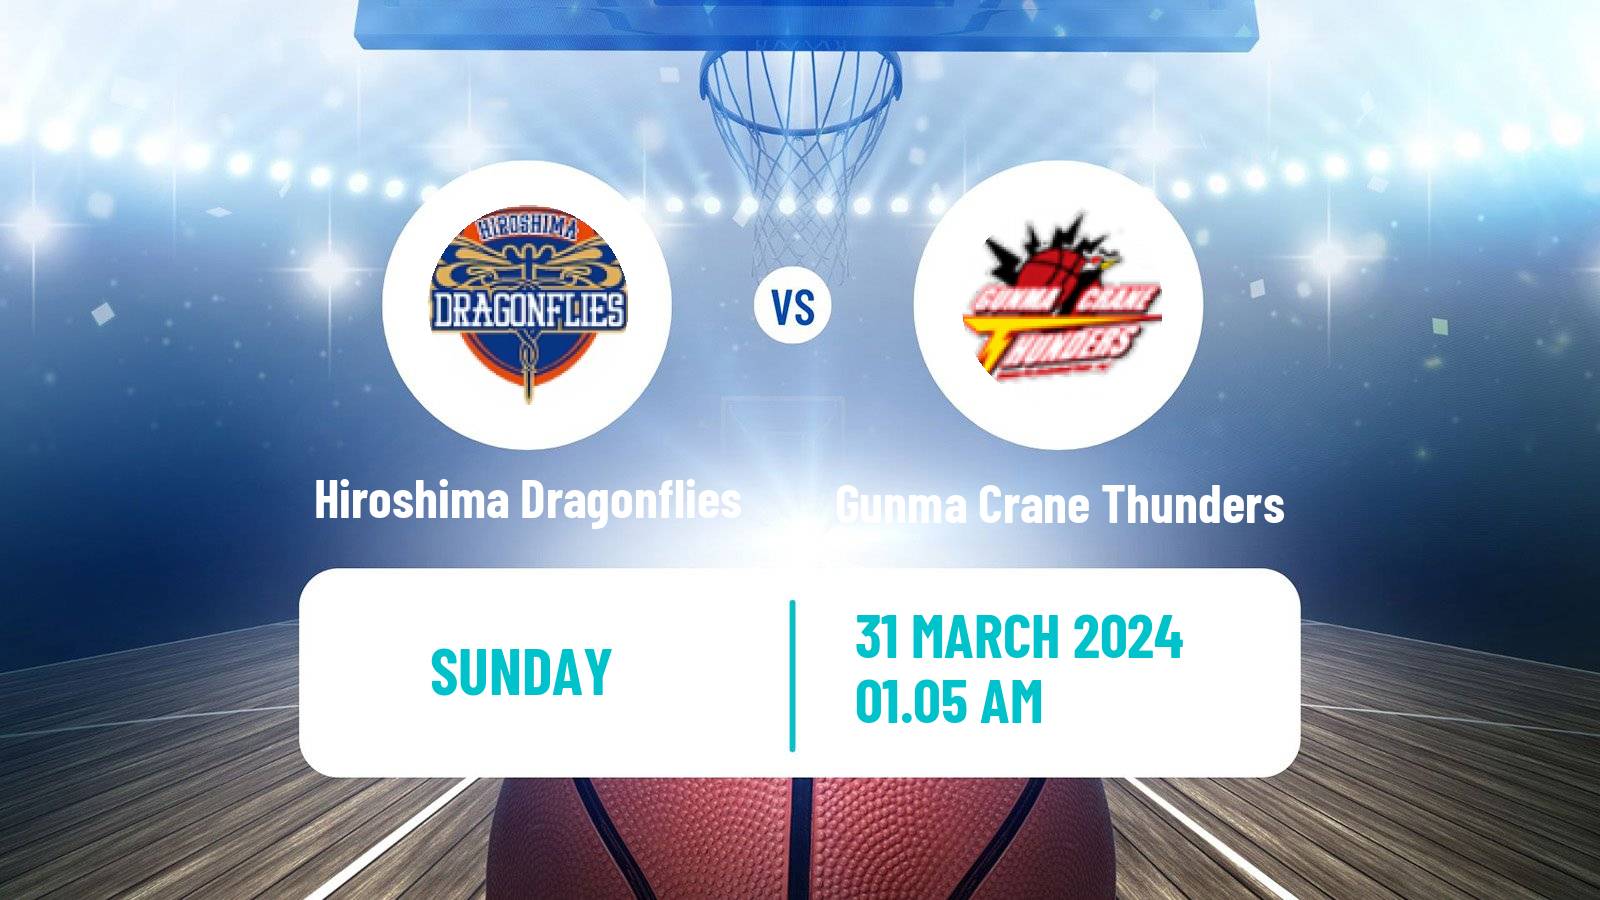 Basketball BJ League Hiroshima Dragonflies - Gunma Crane Thunders